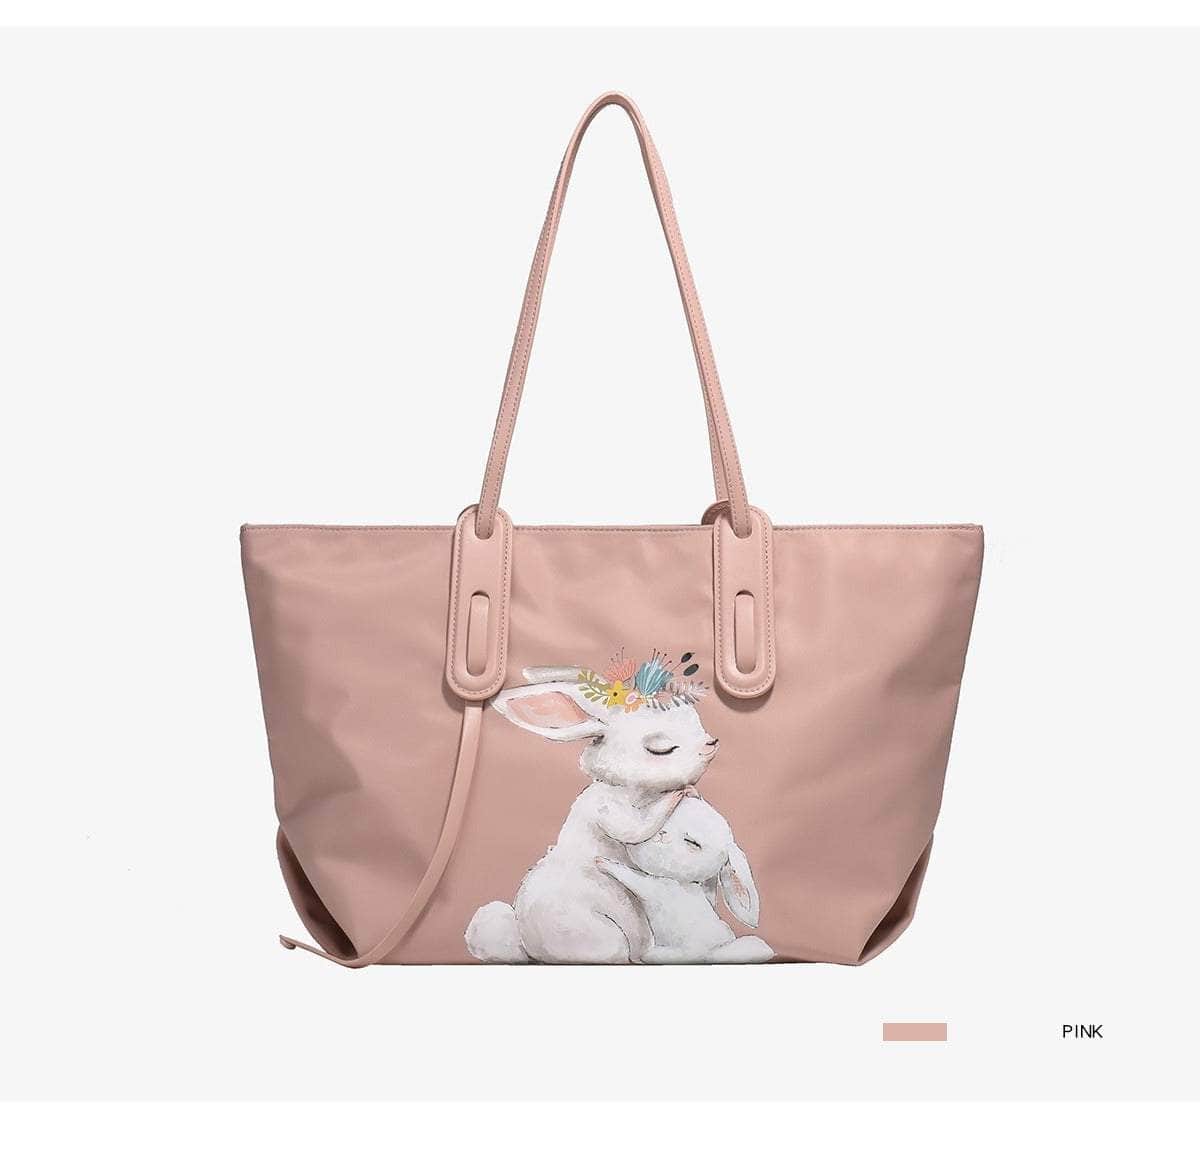 Bunny Print Tote Bag Pink